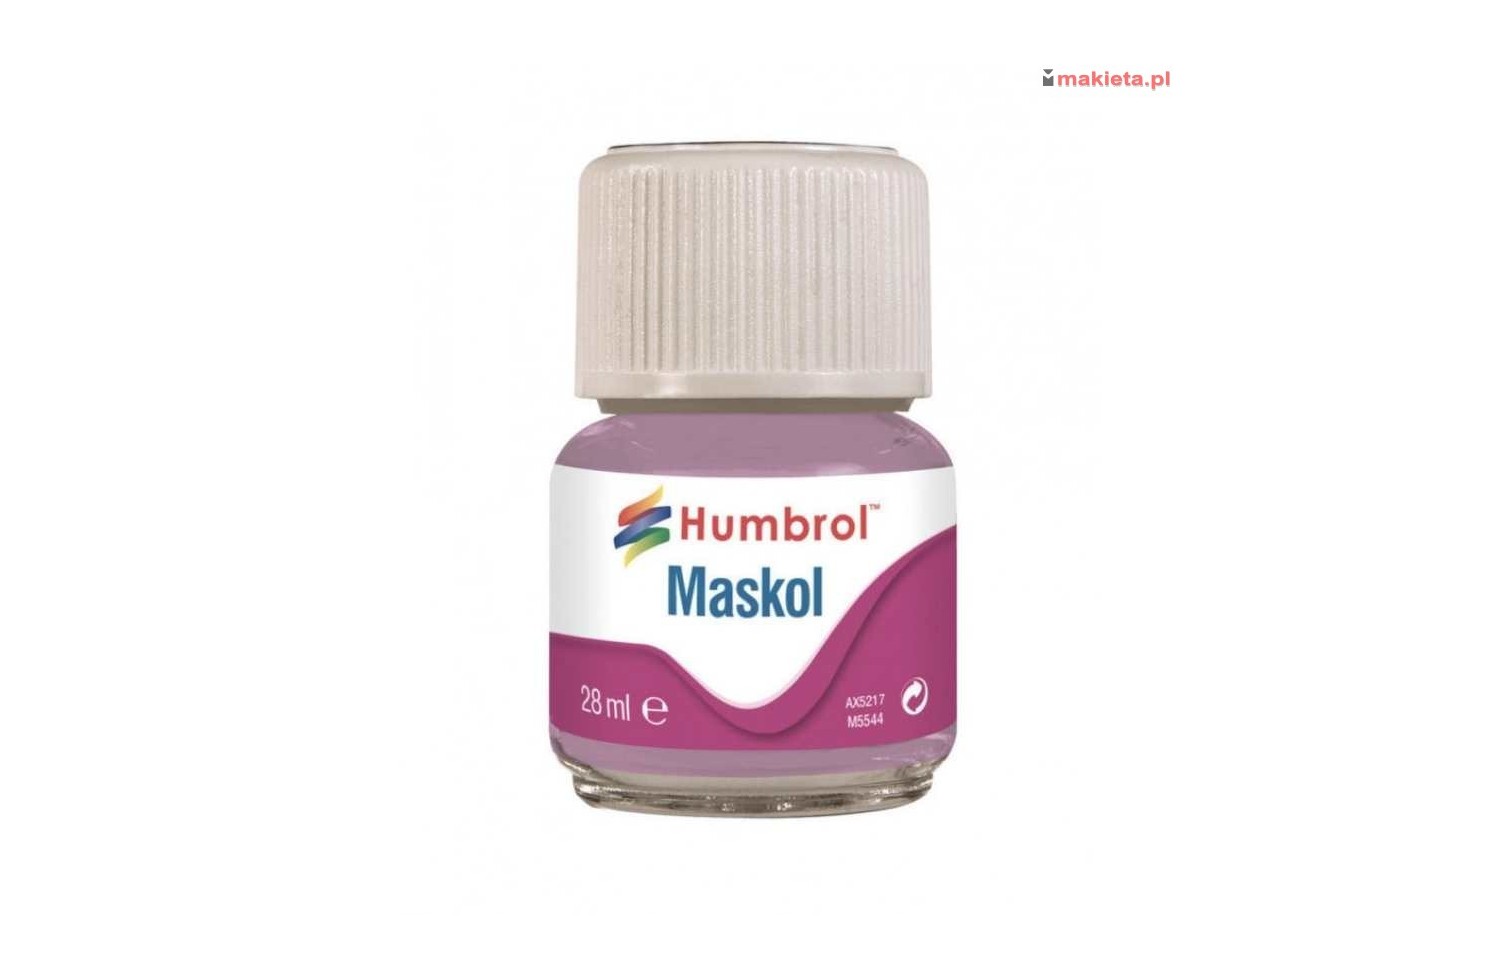 HUMBROL HFM. Maskol, fluid maskujący 28 ml